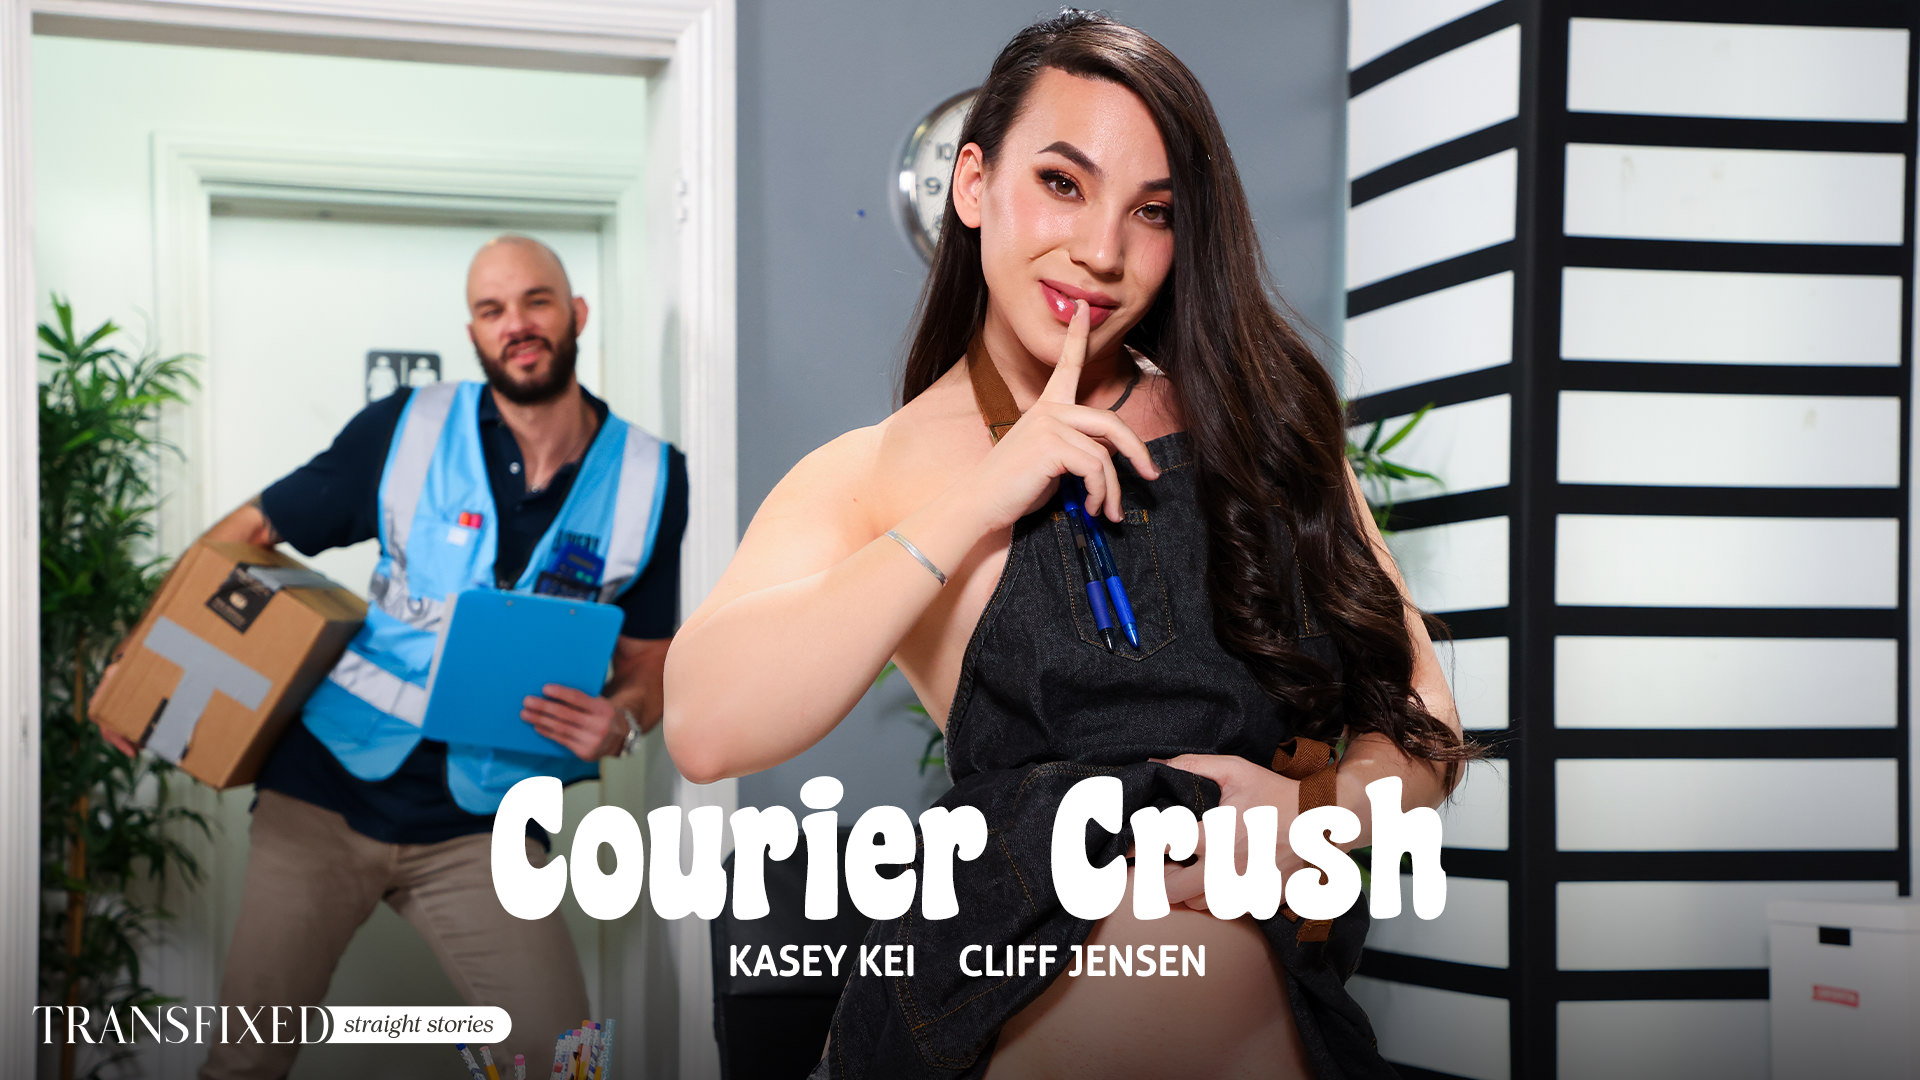 Transfixed Cliff Jensen, Kasey Kei Courier Crush